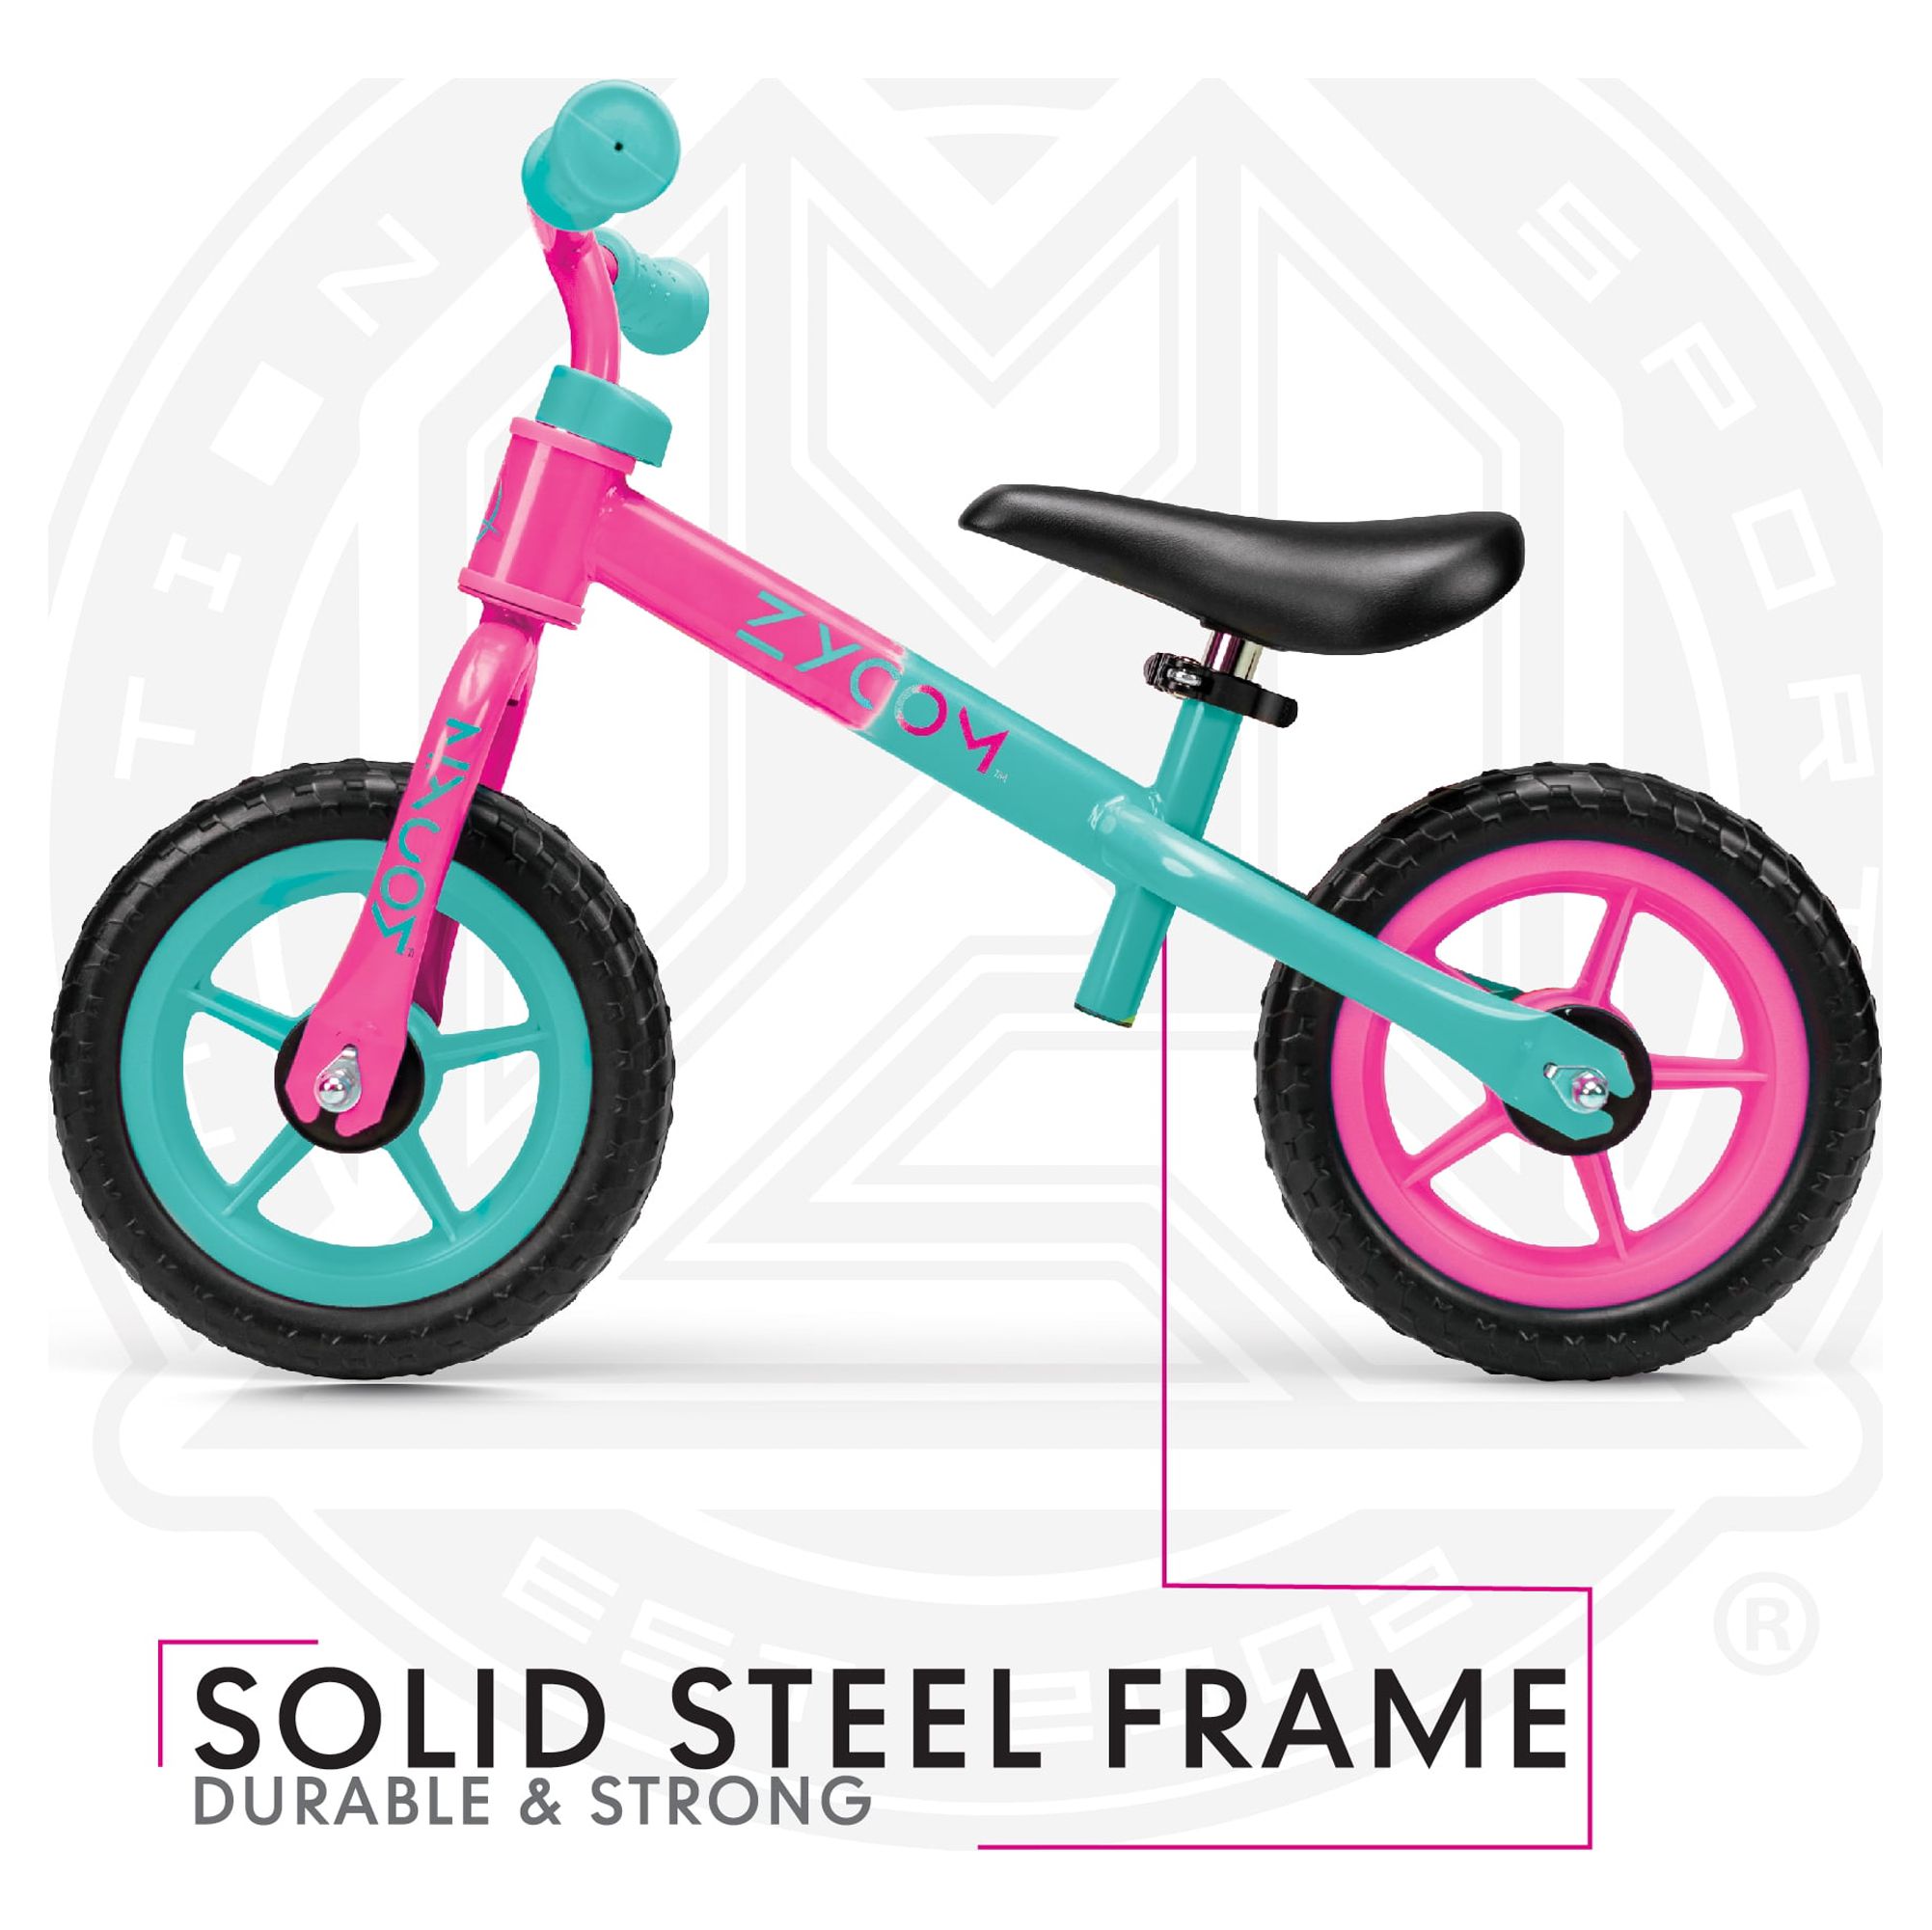 Zycom 10-inch Toddlers Balance Bike Adjustable Helmet Airless Wheels Lightweight Training Bike Pink - image 4 of 11